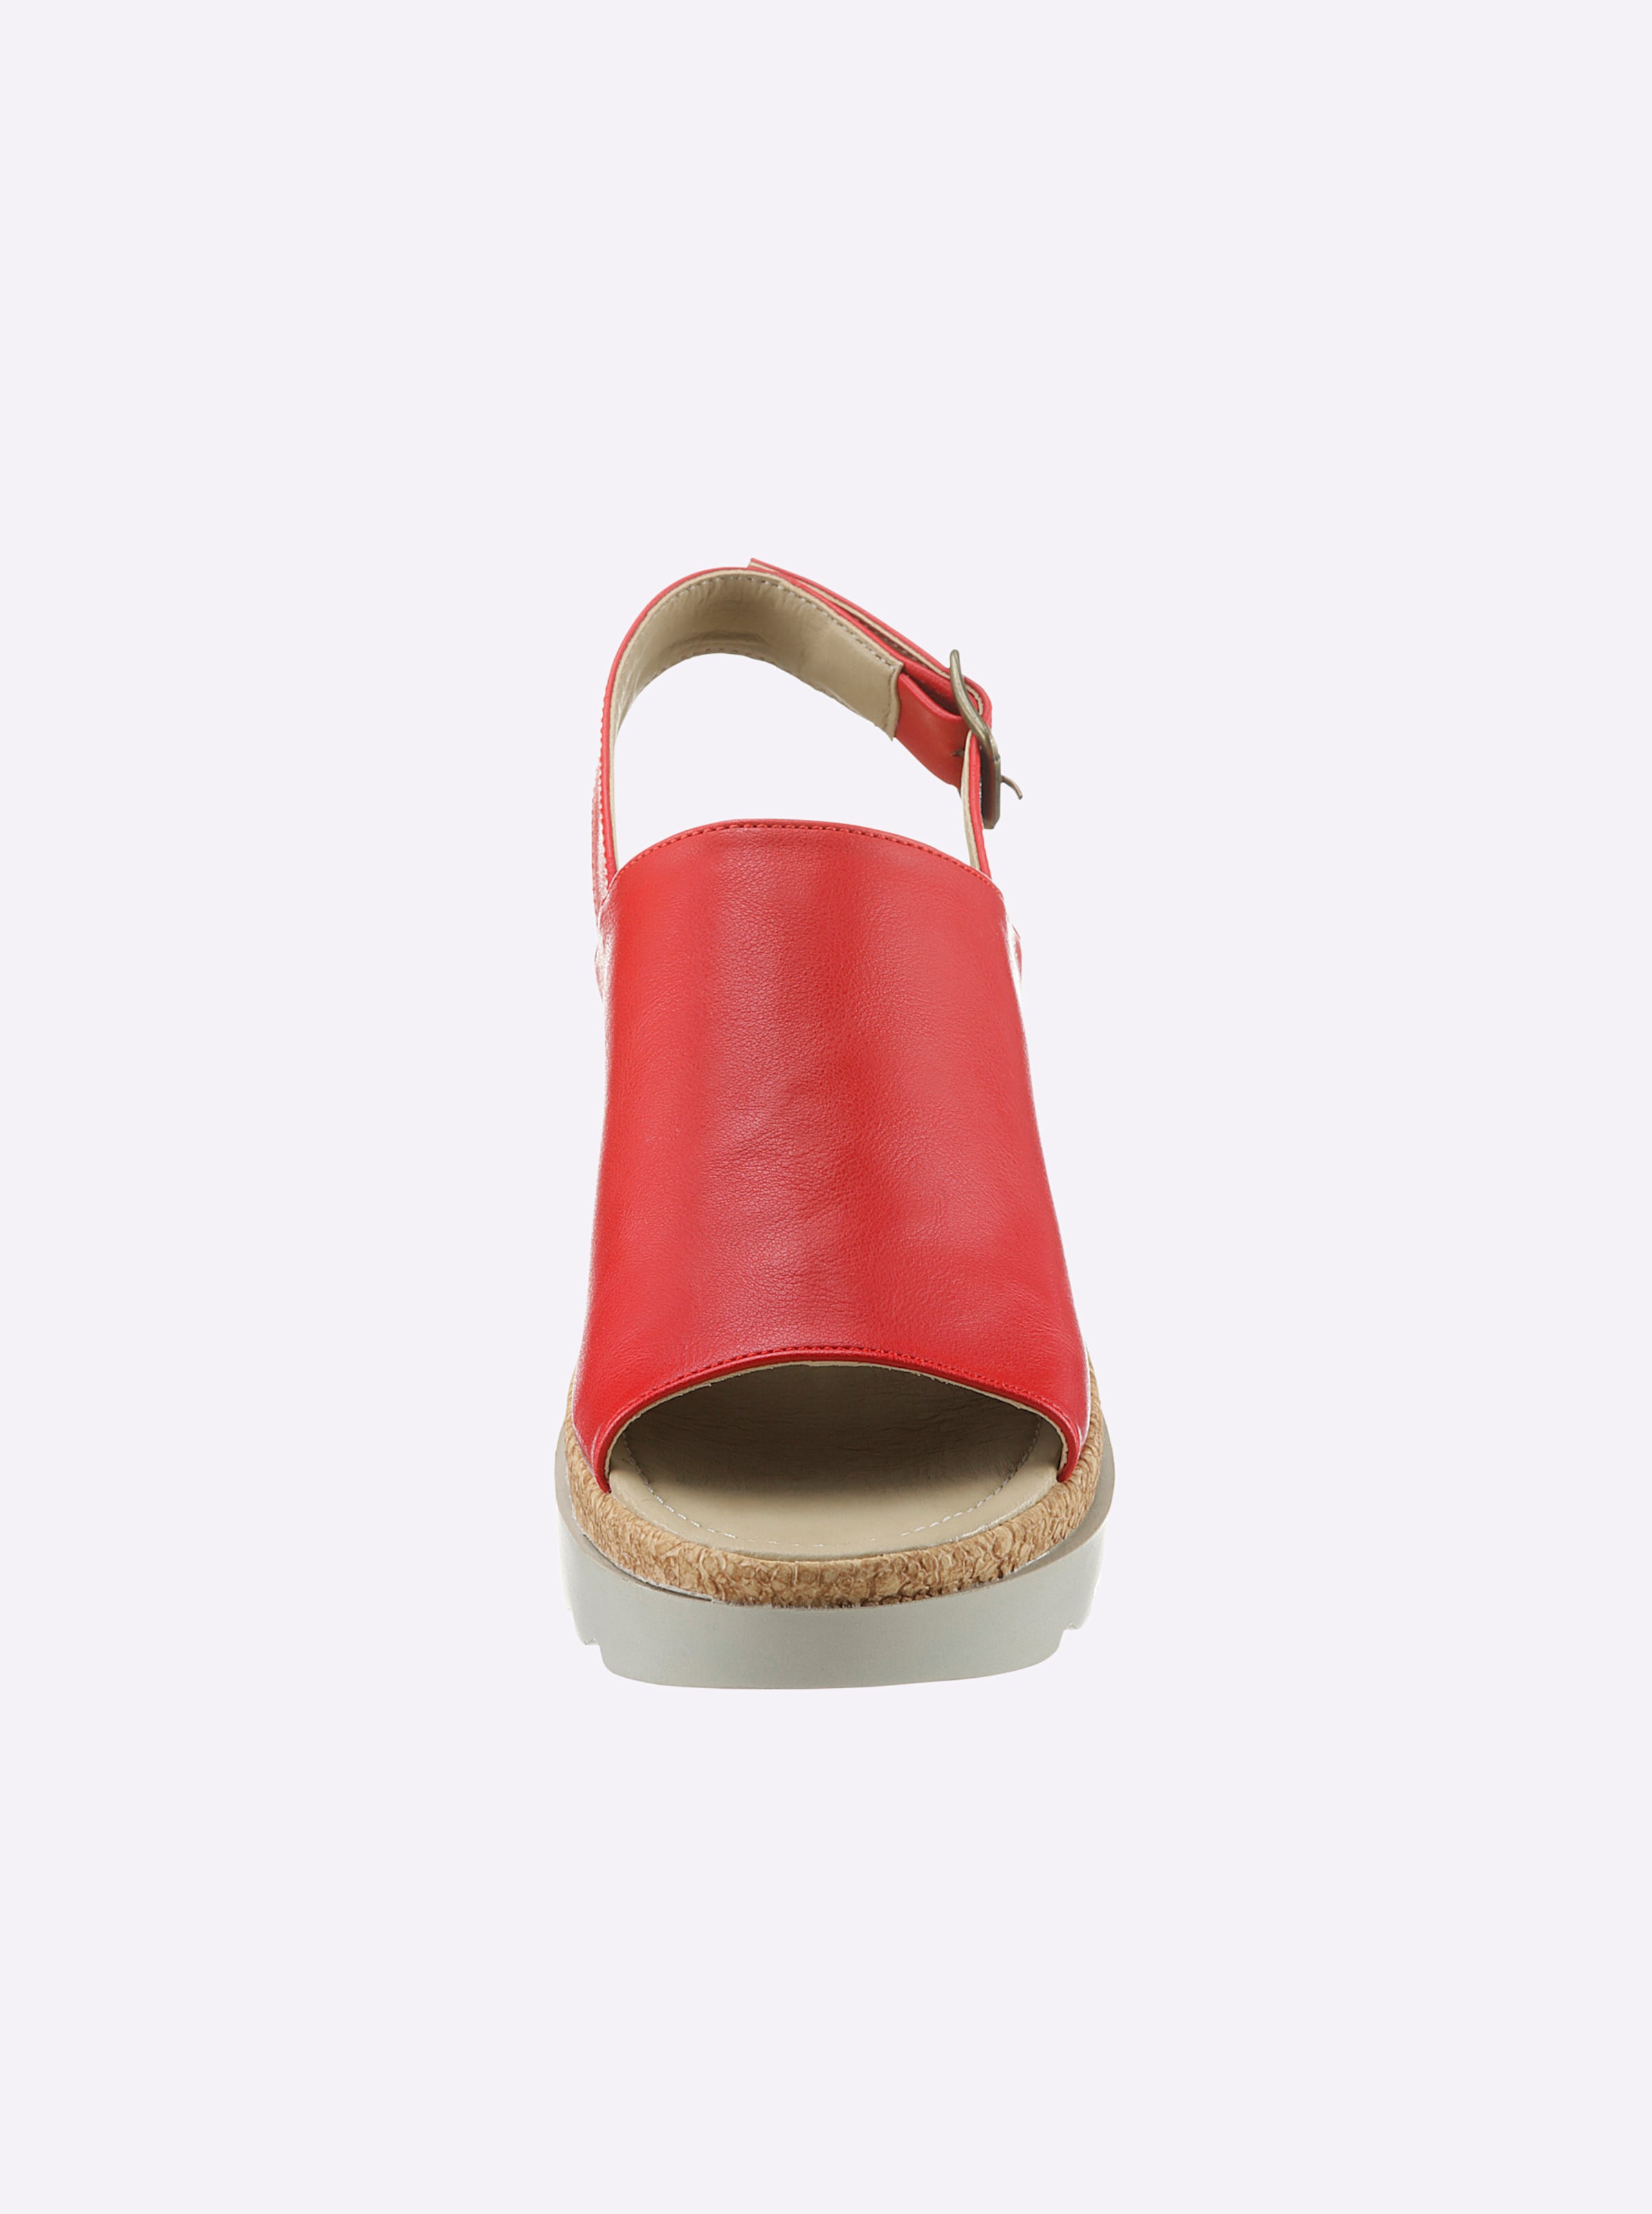 the El günstig Kaufen-Sandalette in rot von Andrea Conti. Sandalette in rot von Andrea Conti <![CDATA[Sandalette In bequemem Synthetik-Material. Futter und Innensohle Synthetik. Mit trendaktueller Plateausohle. Höhe ca. 40 mm.]]>. 